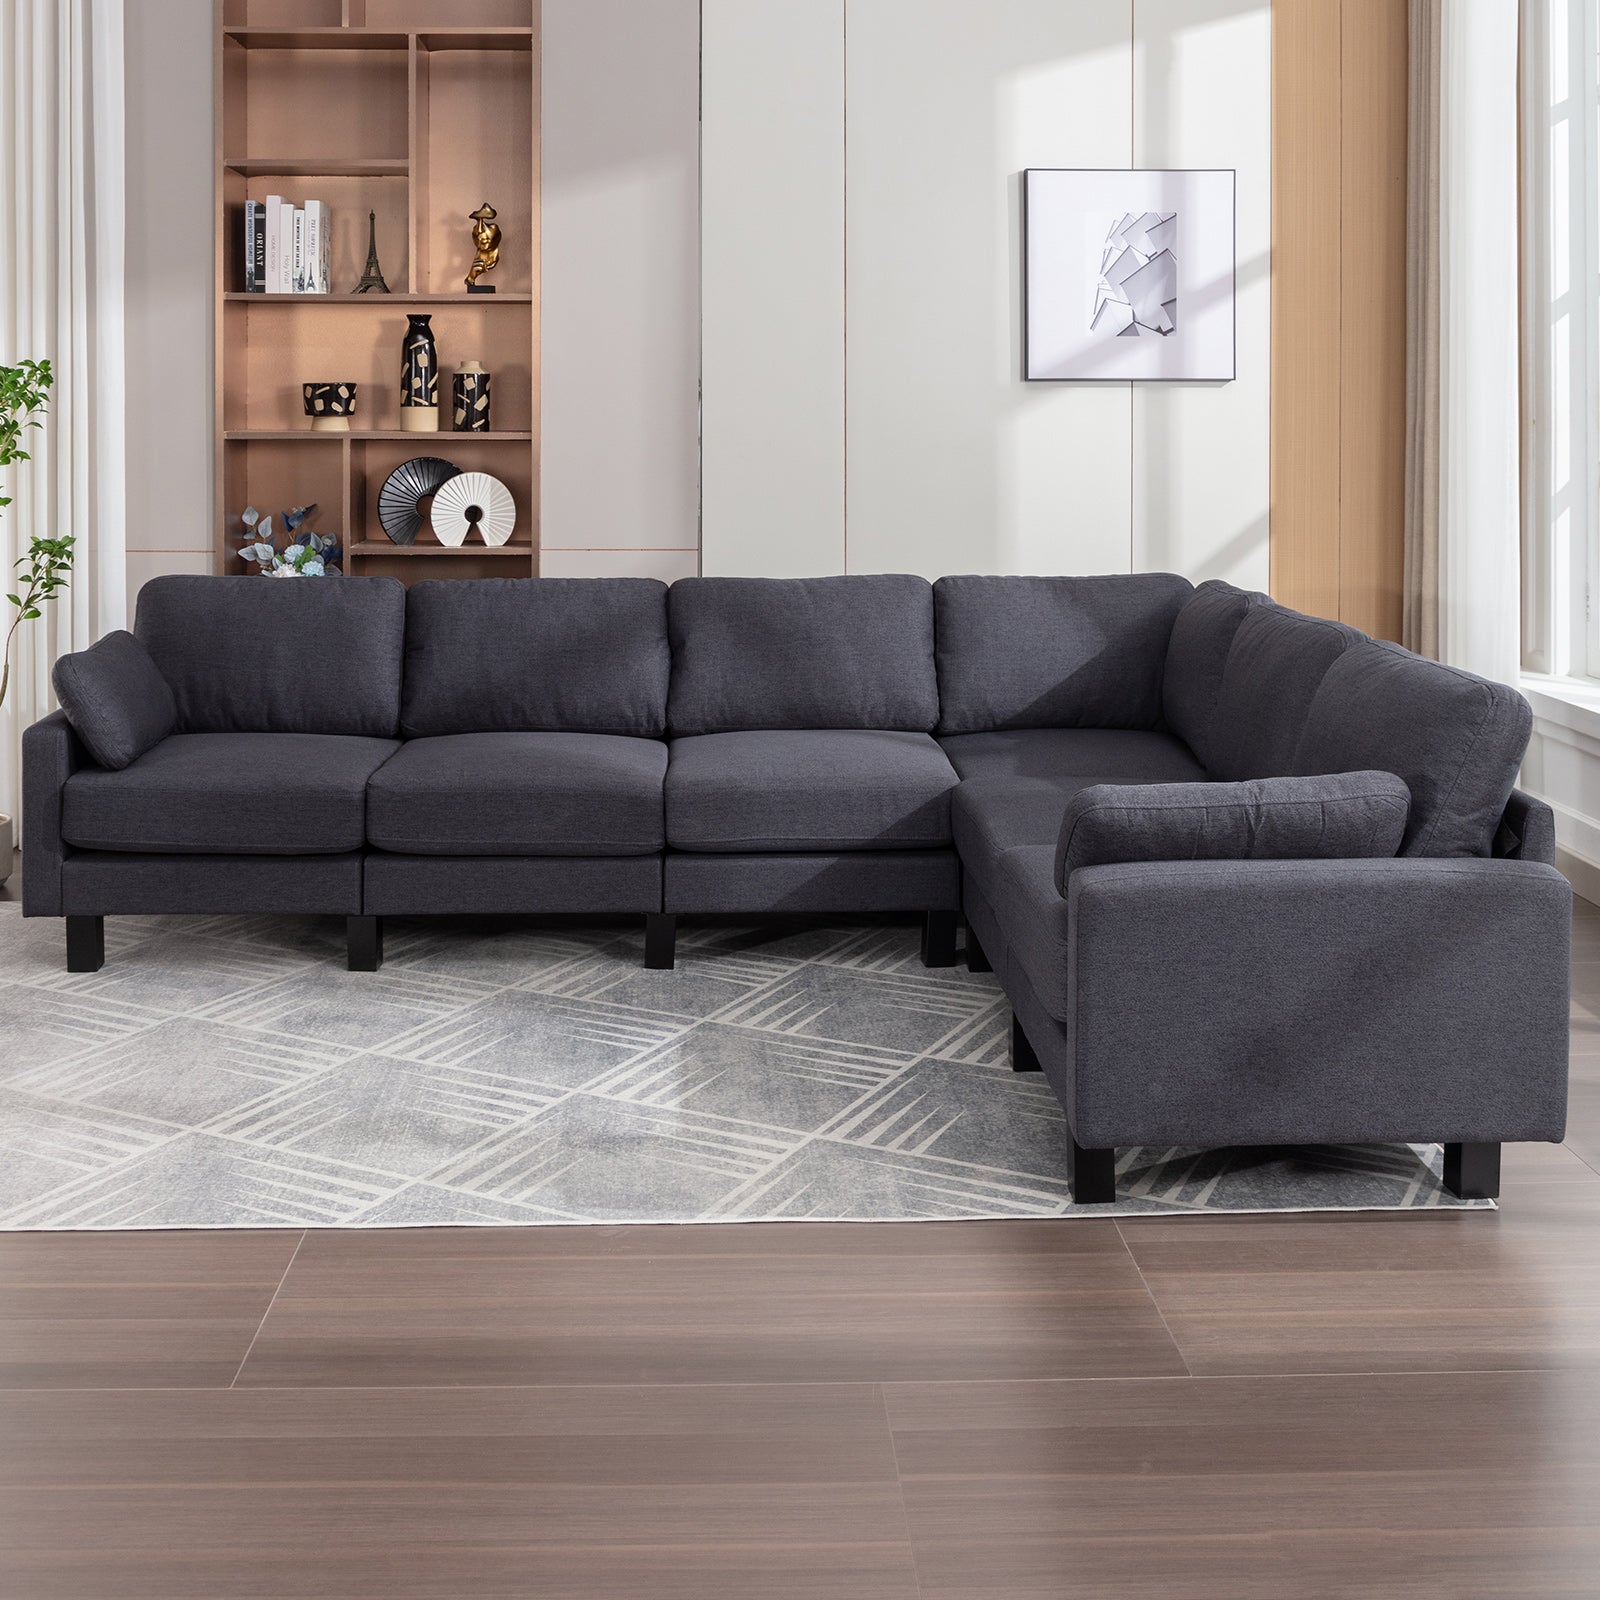 Mjkone L-Shaped Corner Sectional Sofa Set, 6-Seat Modular Sleeper Sofa Couch with Linen Upholstered, L-Shaped Corner Sofa with Solid Wood Legs, Living Room Furniture Set